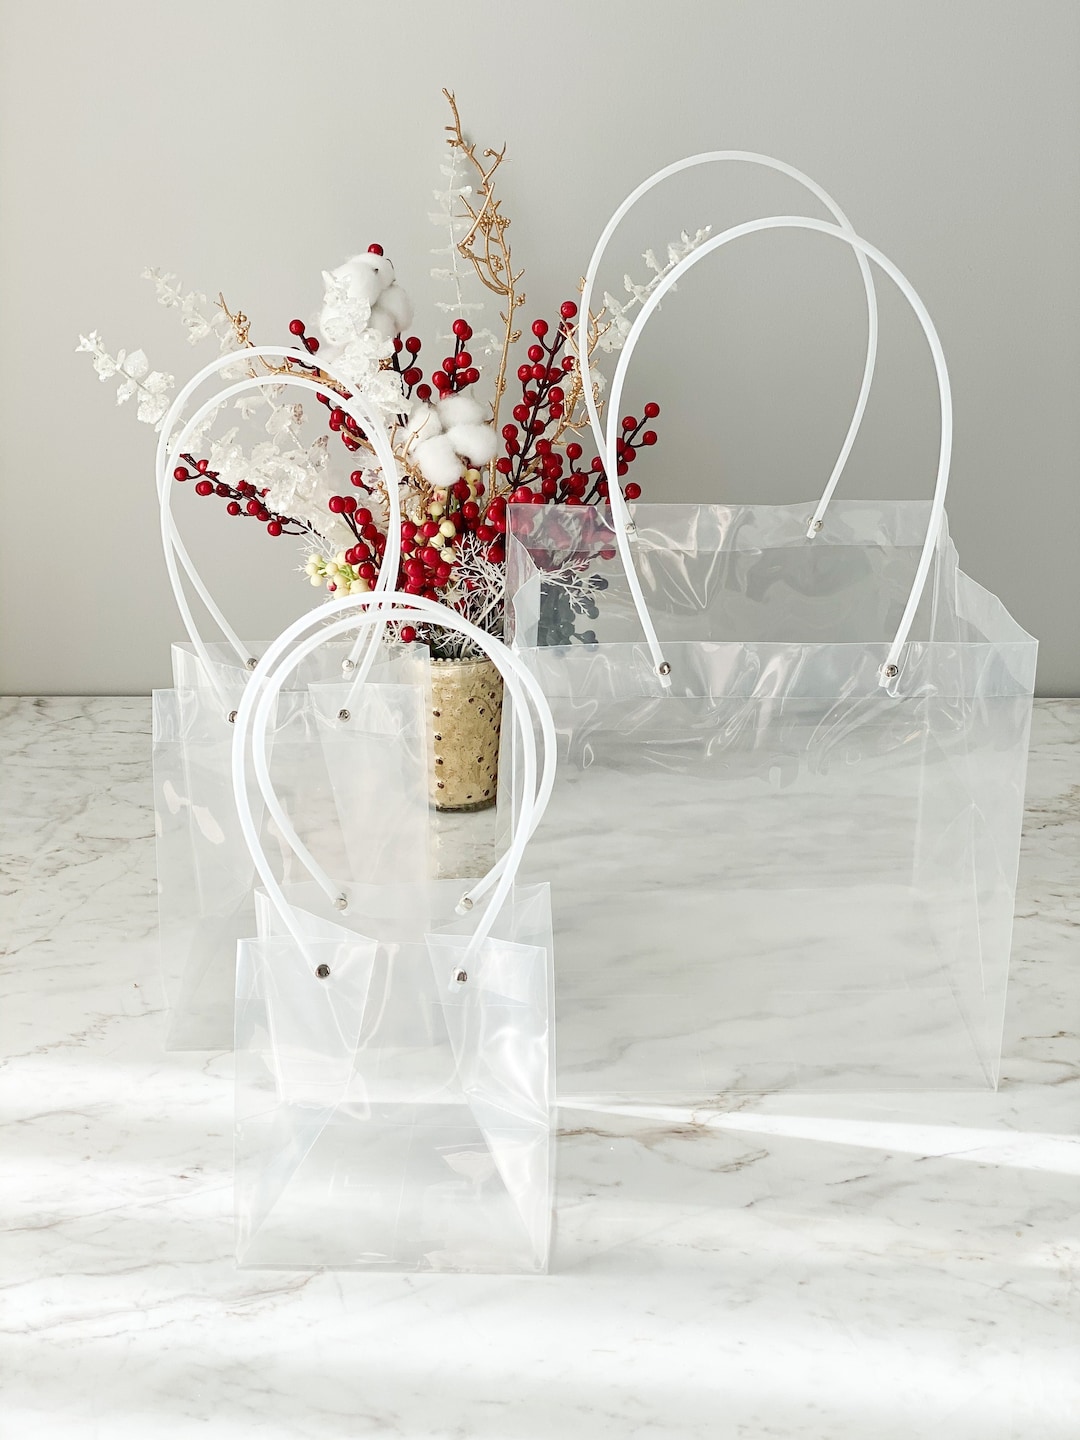 Transparent Waterproof Plastic Flower Bouquet Bag, Single Rose